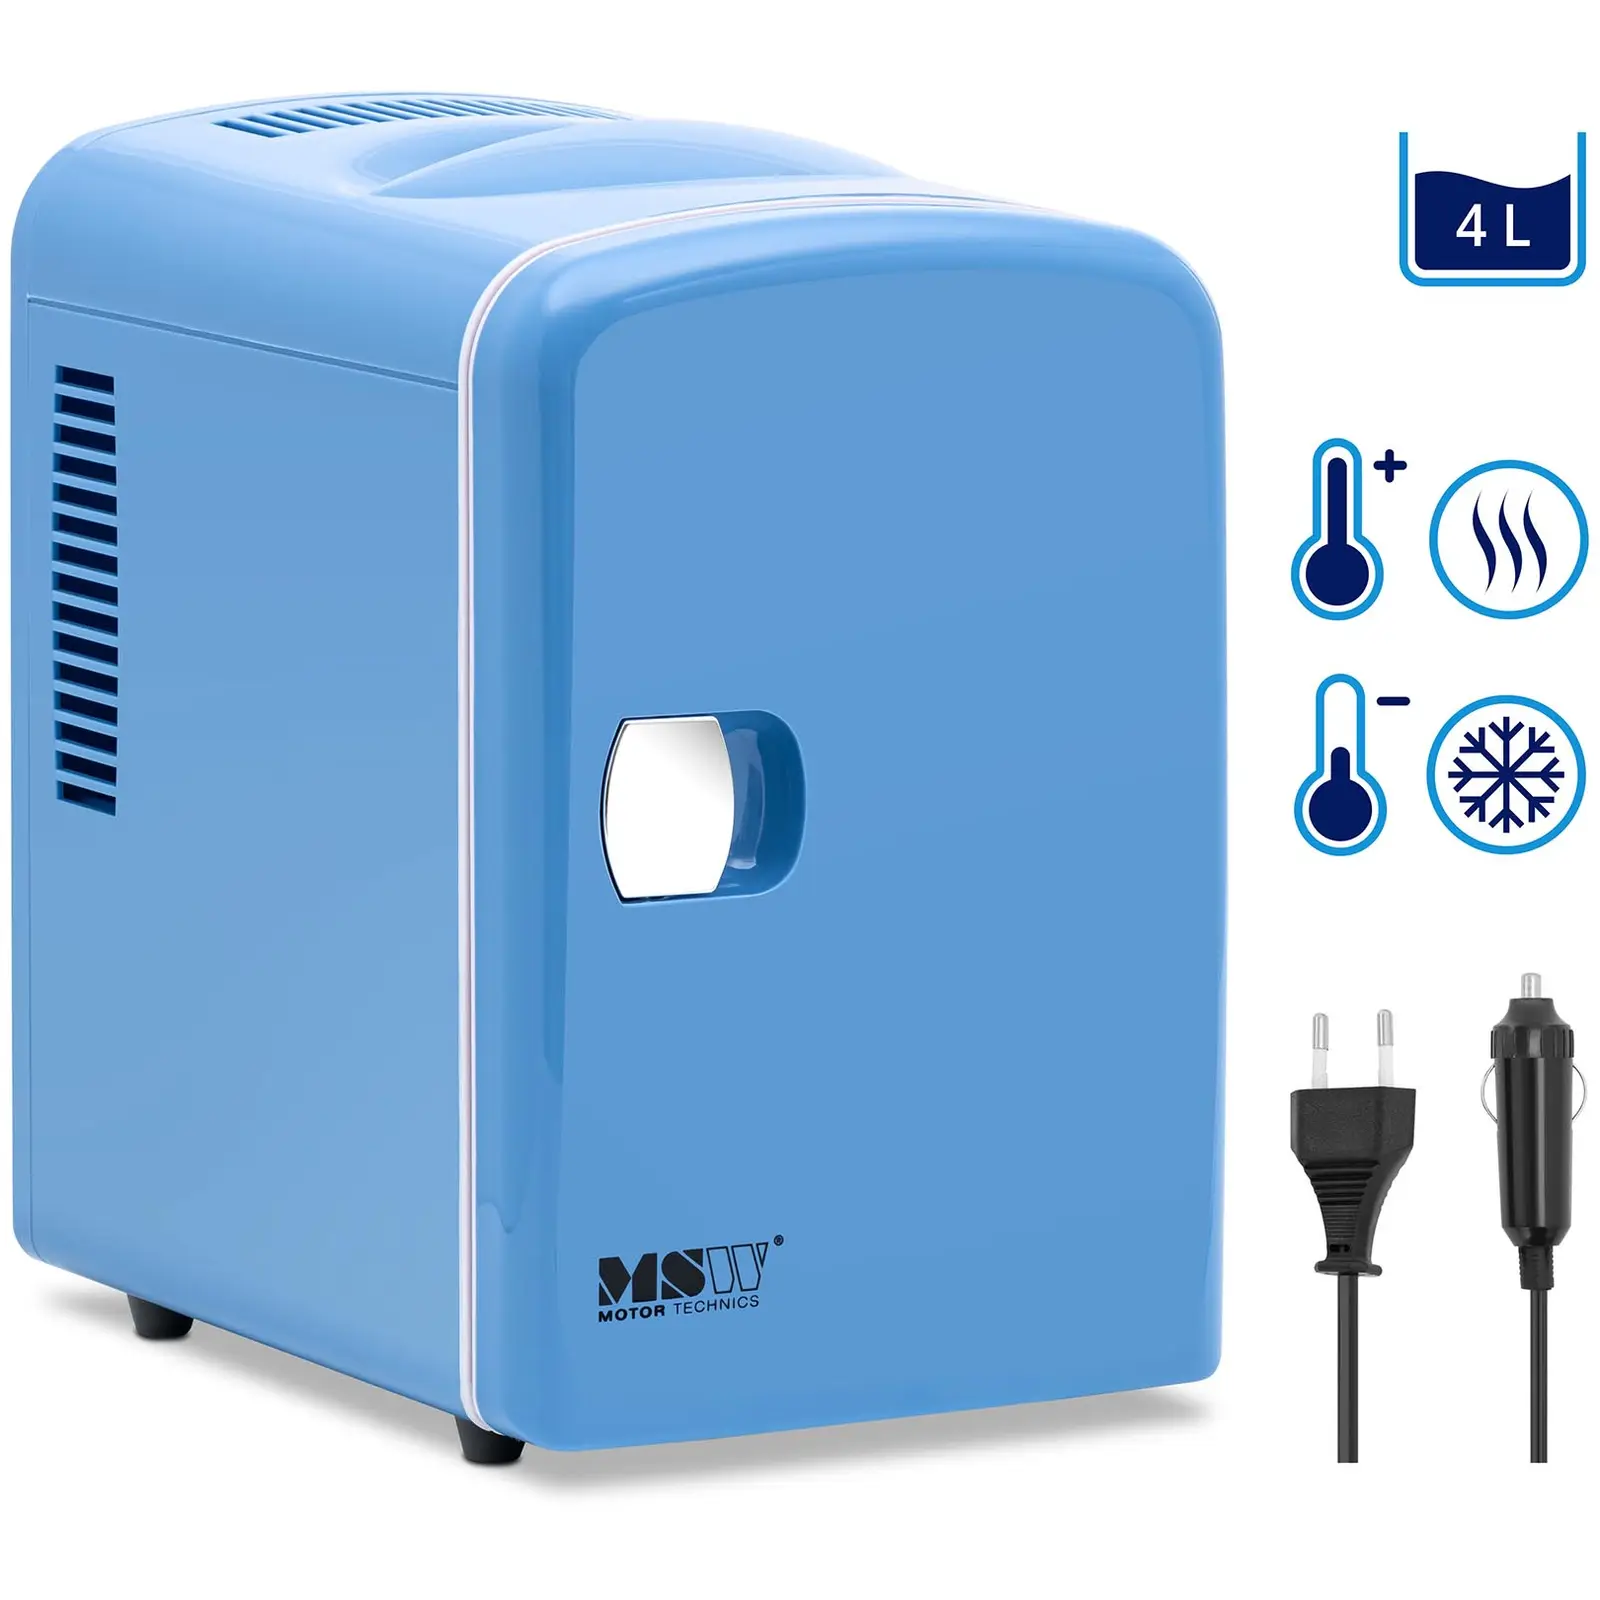 Mini-Kühlschrank 12 V / 230 V - 2-in-1-Gerät mit Warmhaltefunktion - 4 L - Blau - 1